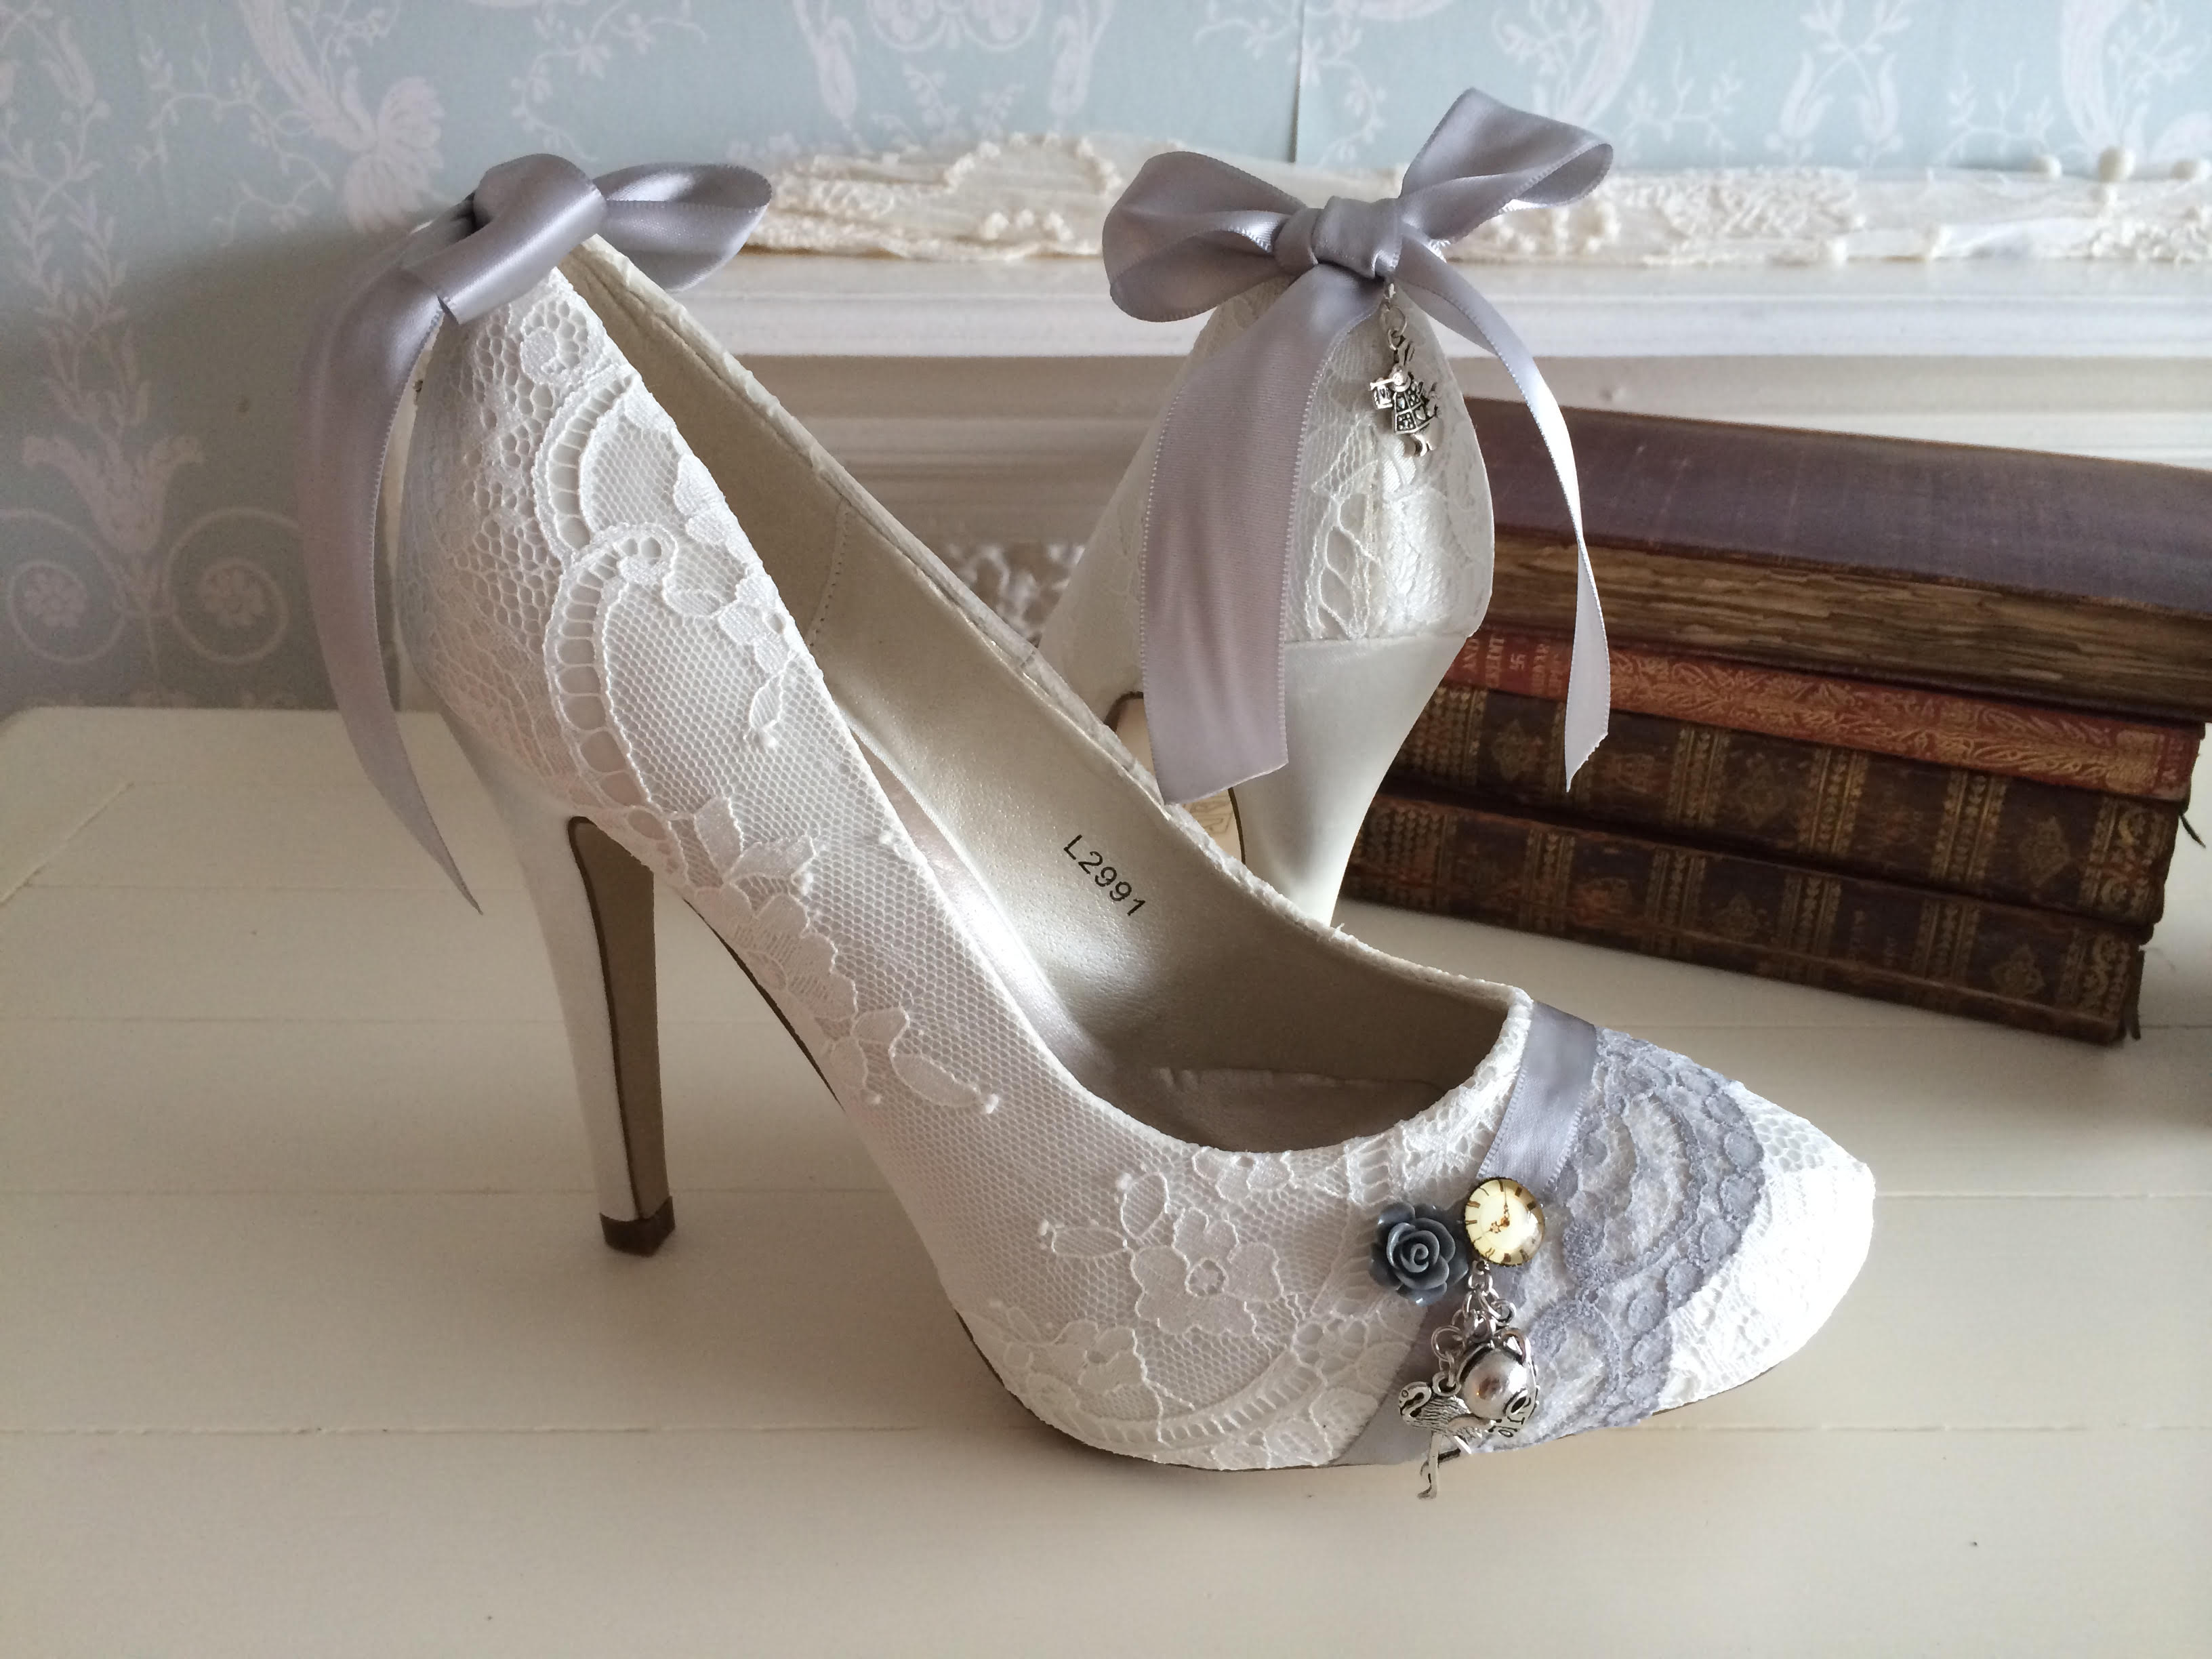 Alice in Wonderland wedding inspiration - alice shoes - alternative and unconventional wedding